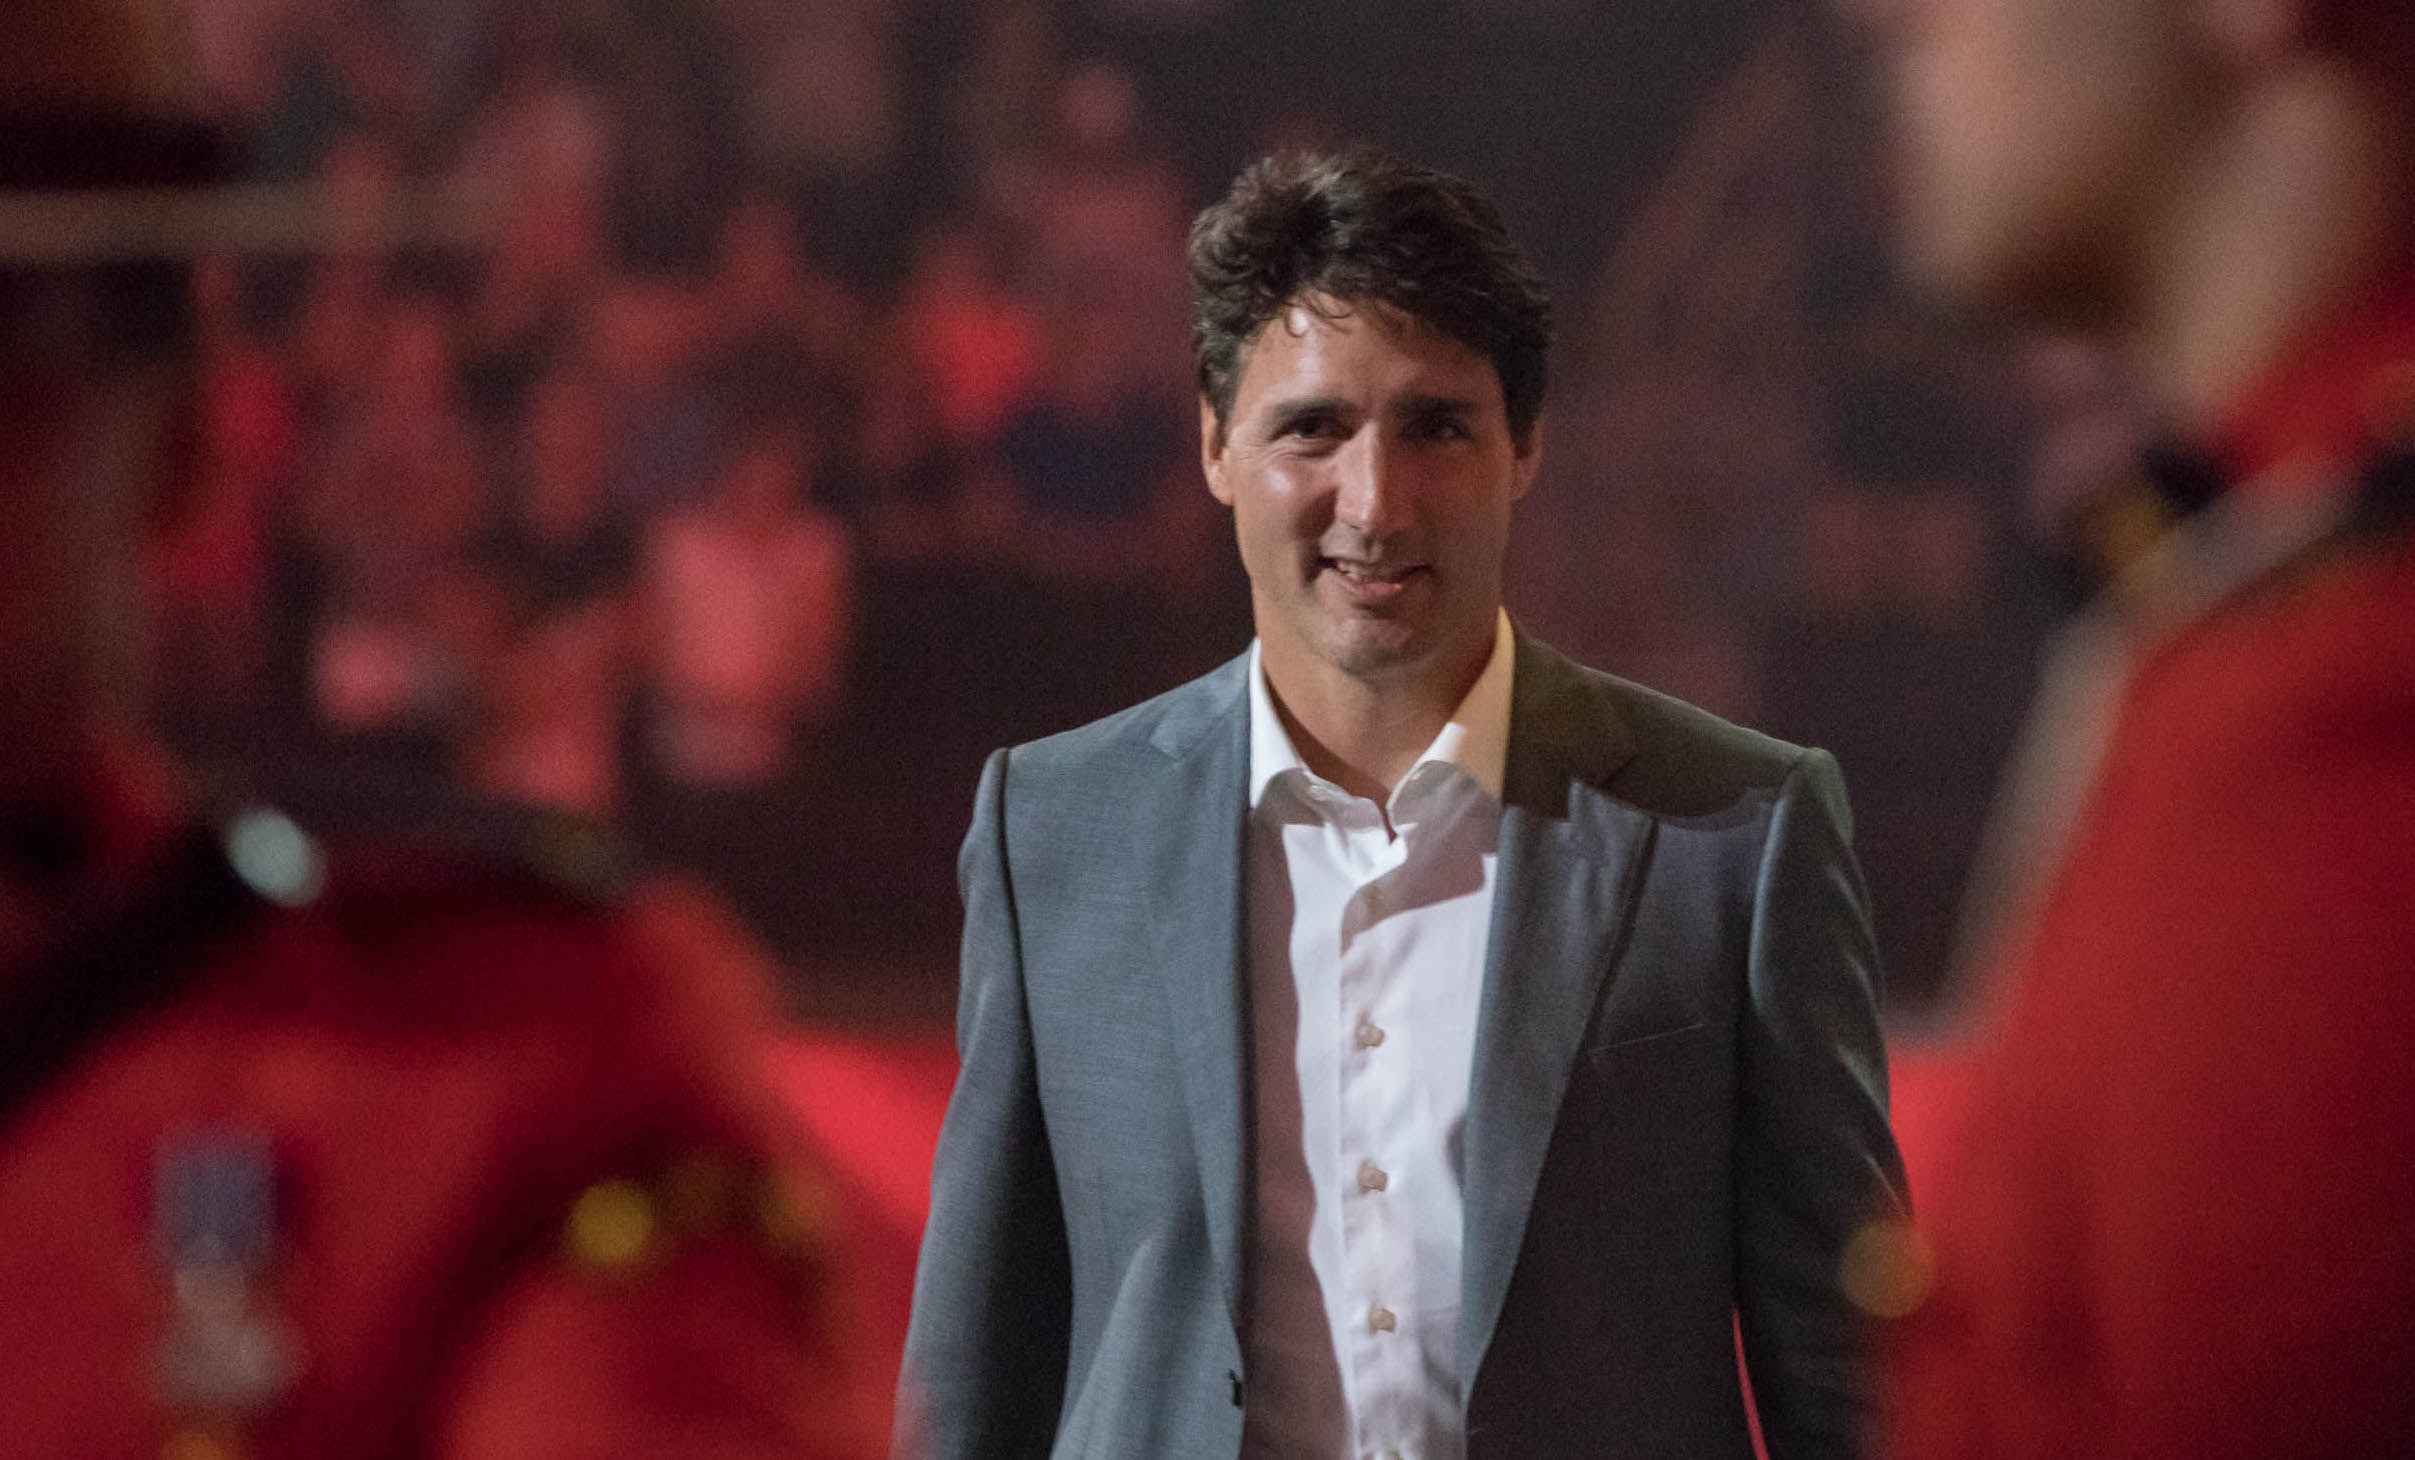 Justin Trudeau’s gaslighting of Jody Wilson-Raybould will fail